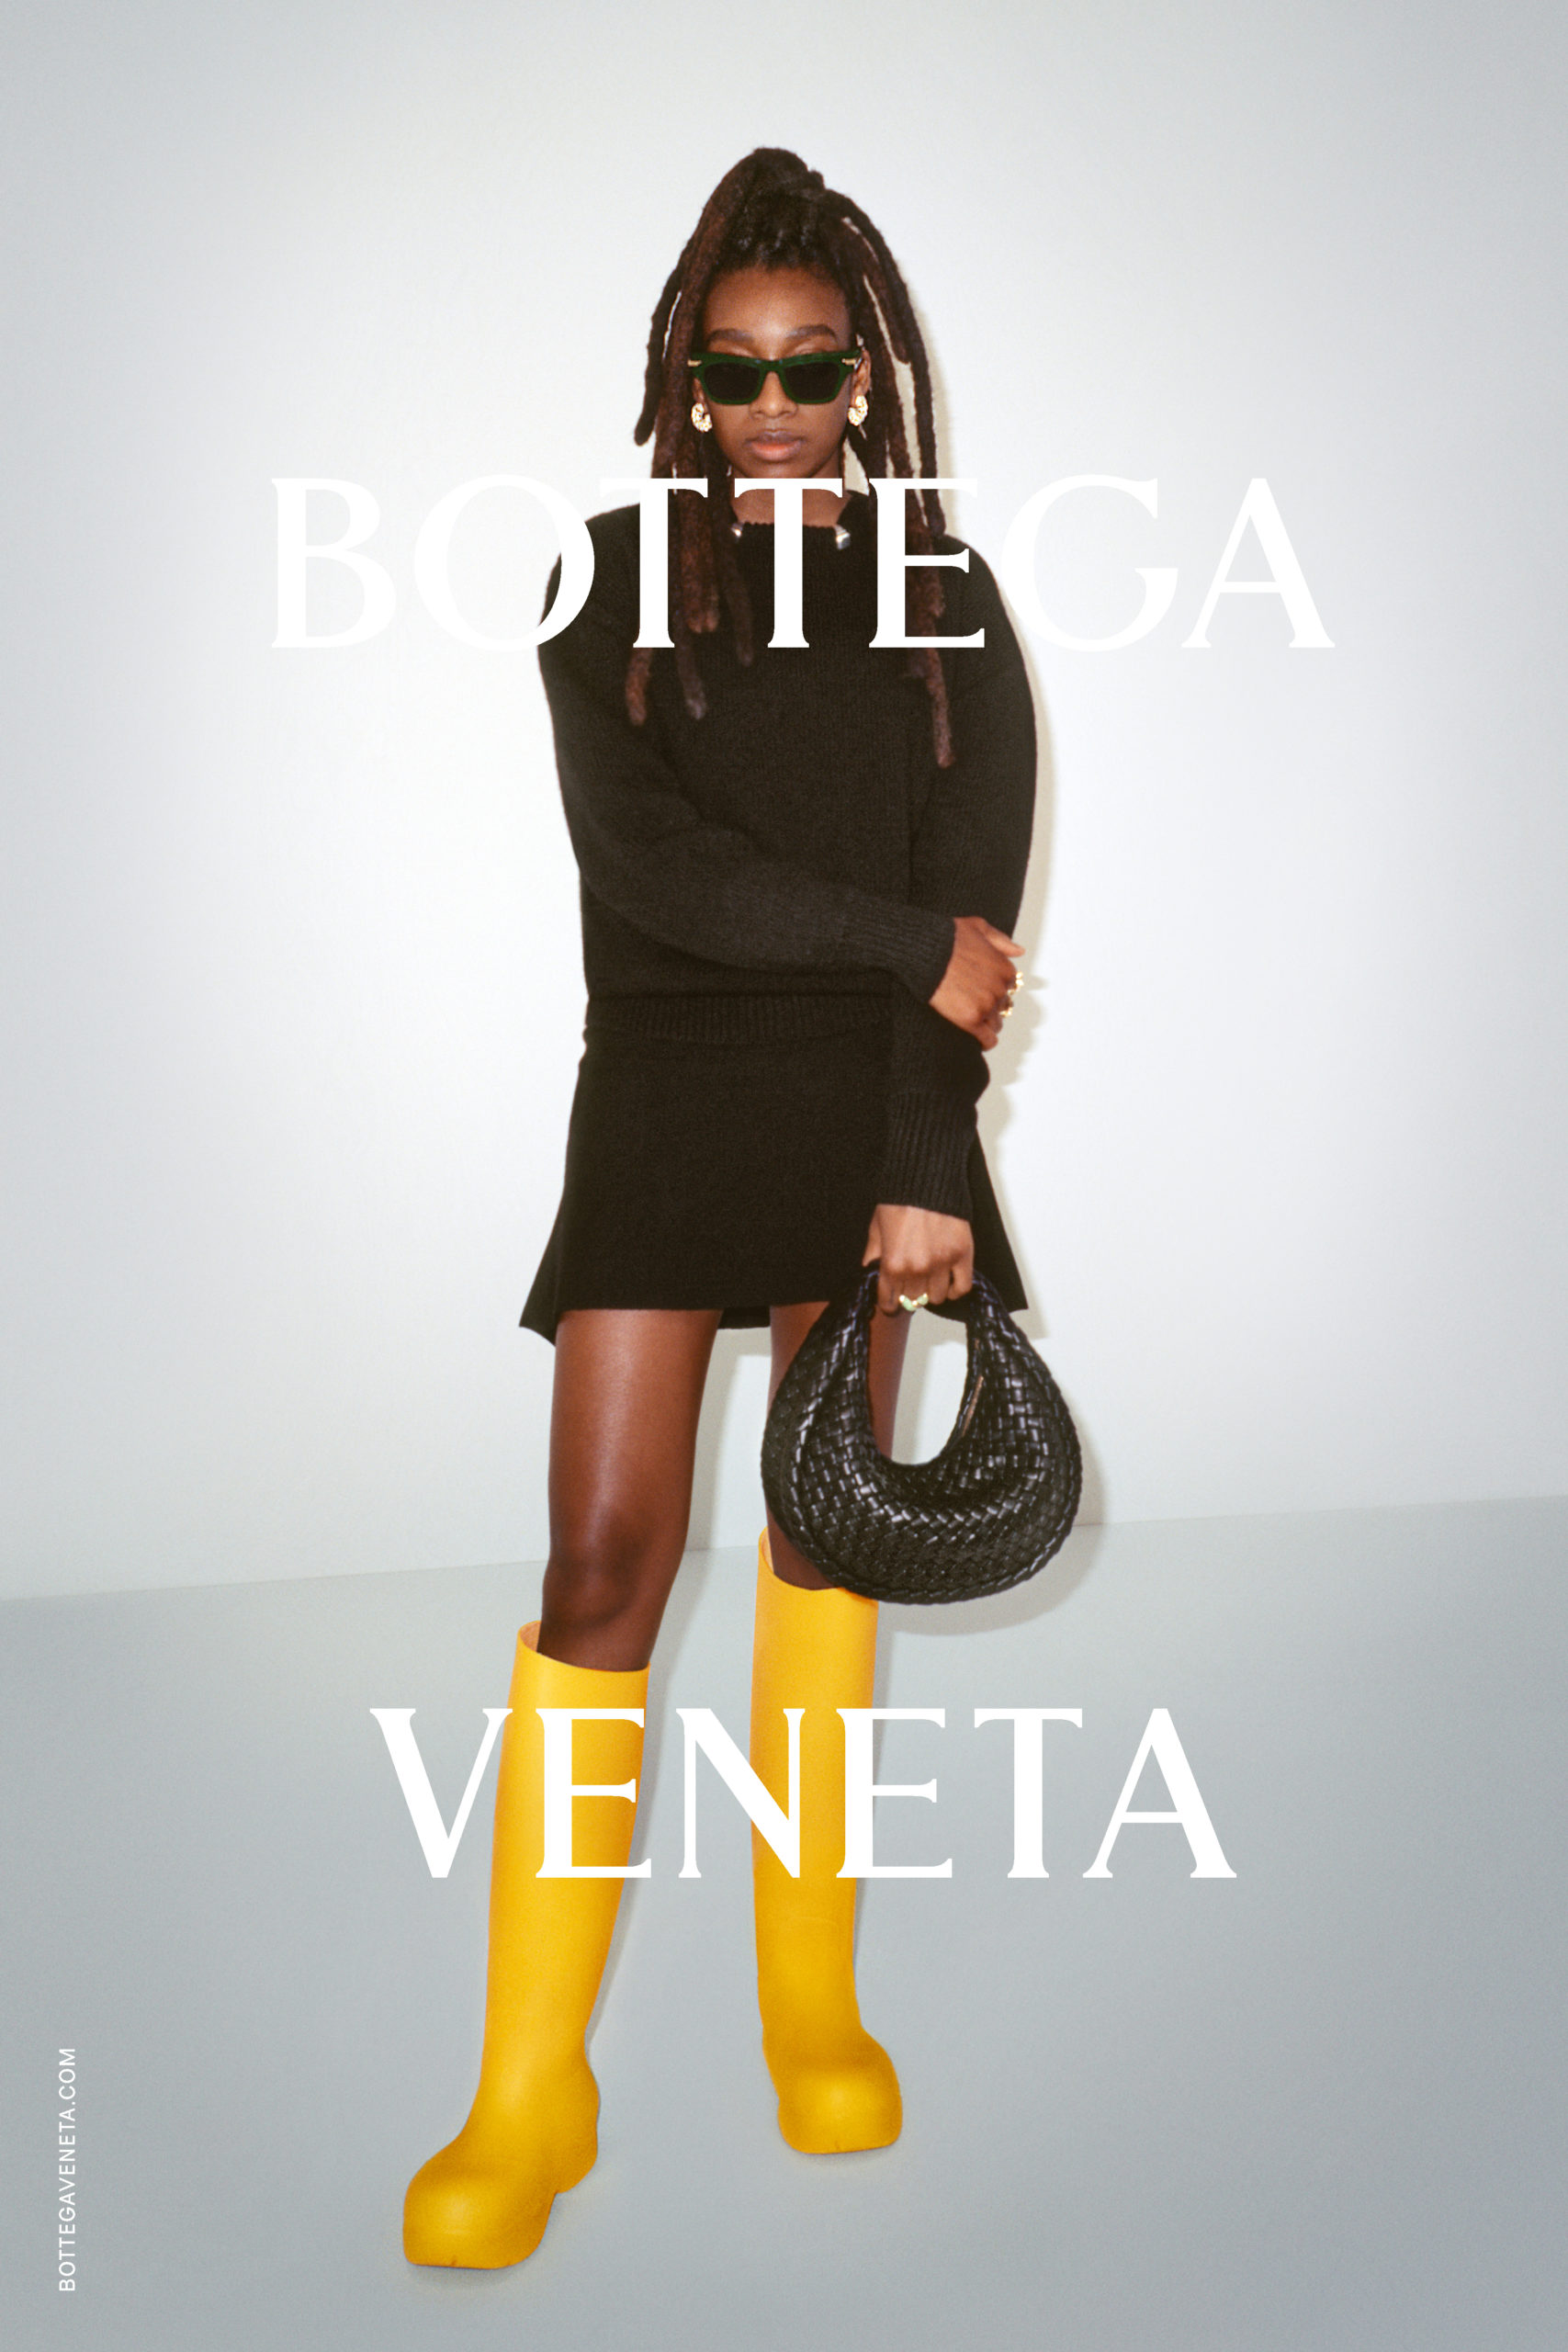 These Bottega Veneta Pieces Are the Secret To So Many Epic Celebrity Looks